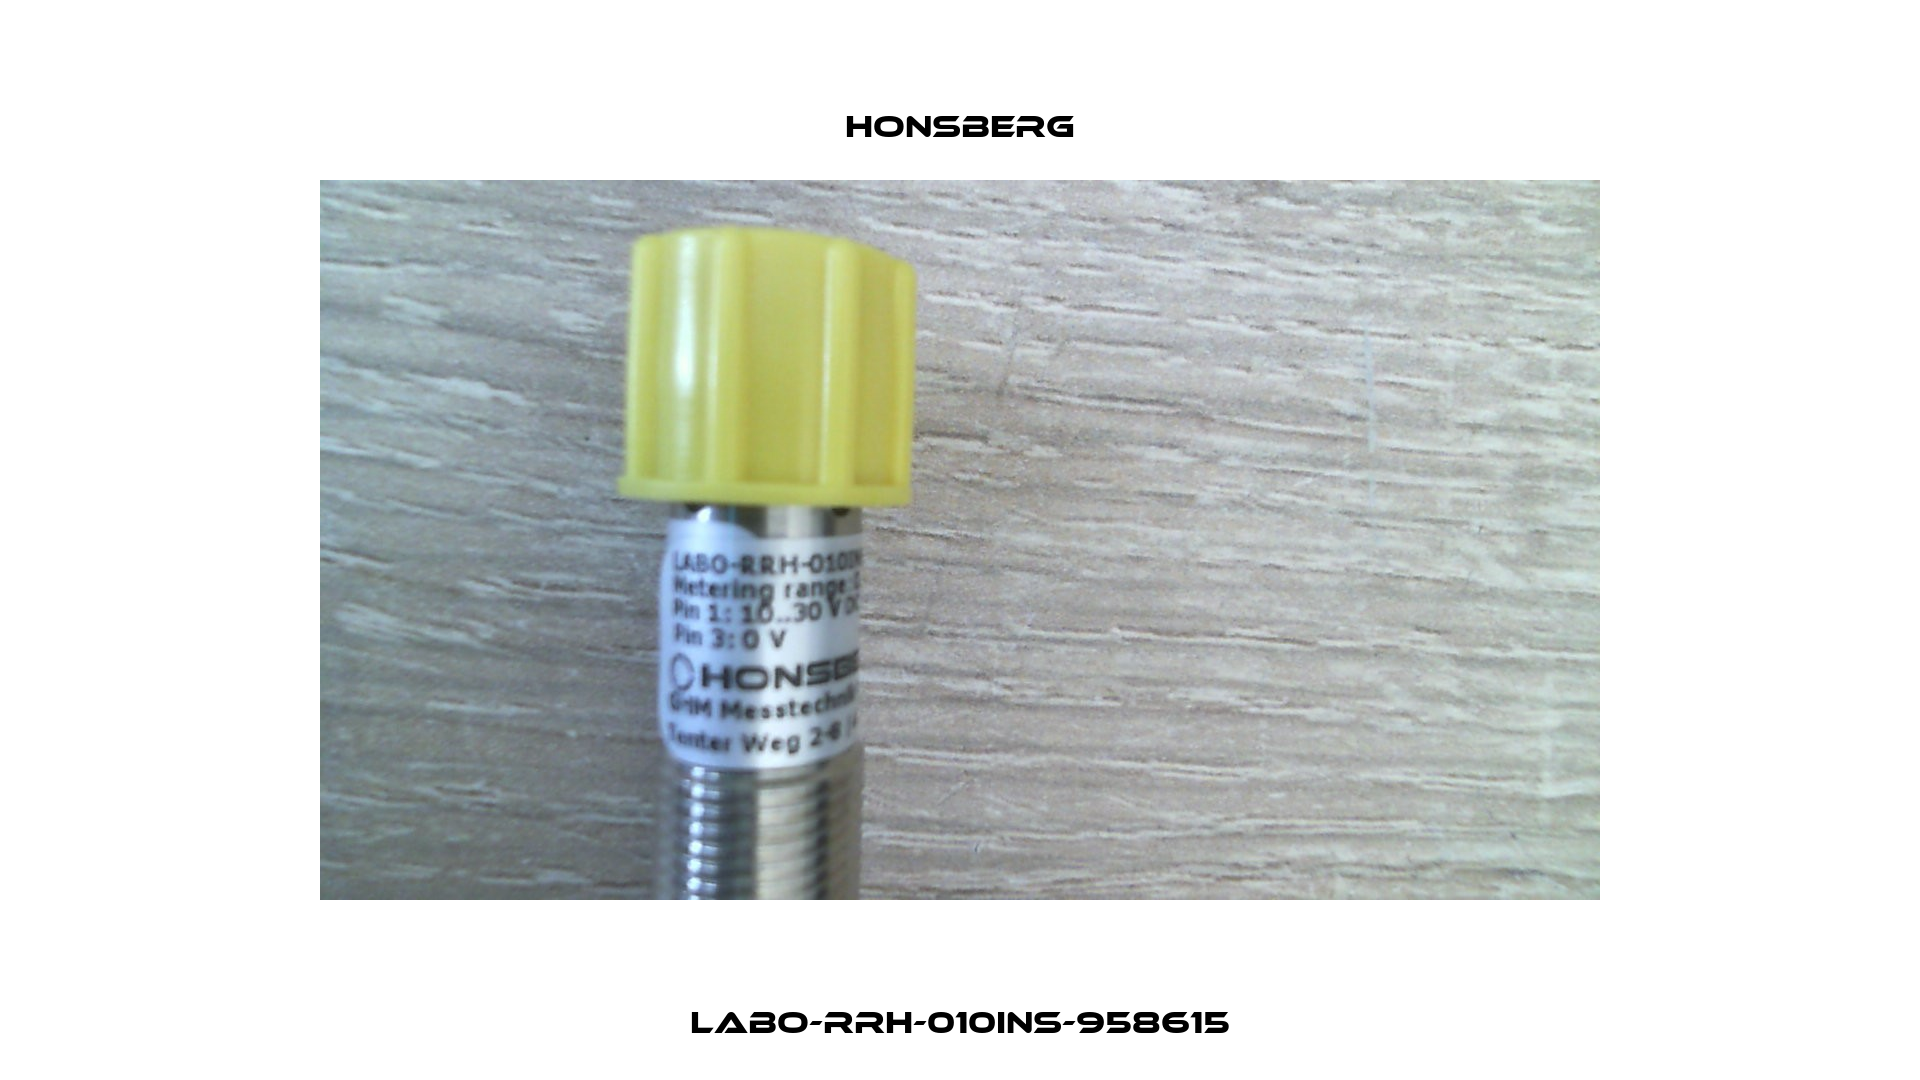 LABO-RRH-010INS-958615 Honsberg